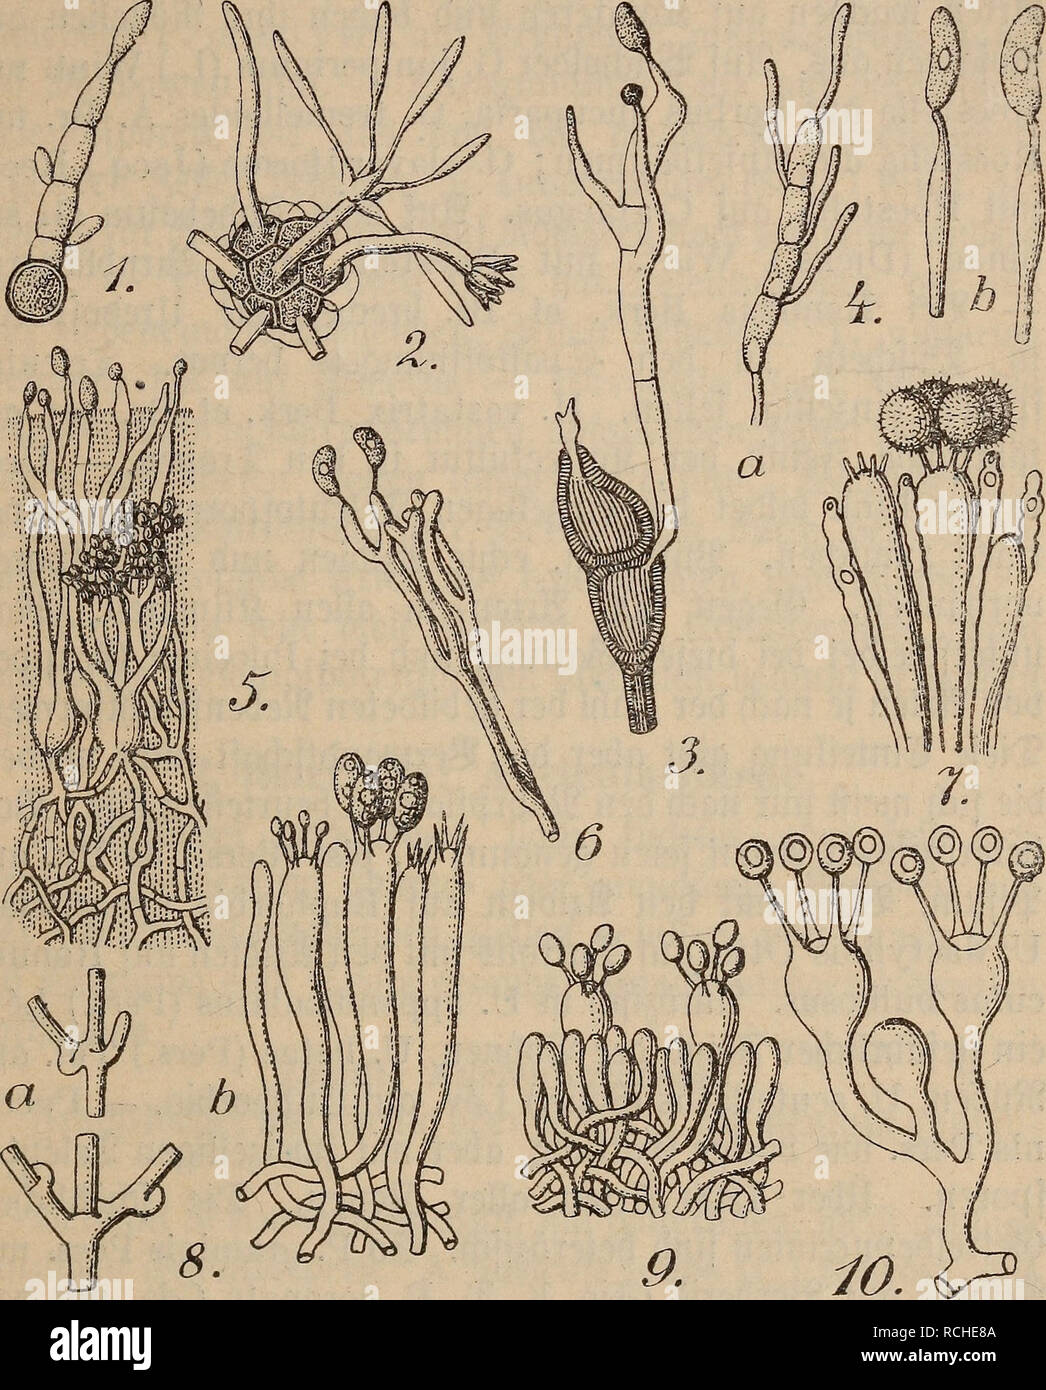 . Die pilze, eine einfu?hrung in die kenntnis ihrer formenreihen ... Fungi. Basidiomycetes. 99. LI 8- %&amp;. K. 1. Ustilago avenae. ,£&gt;emtöafibie. 2. Urocystis violae. ^emiBafibie. 3. Puccinia graminis. S5afibte. 4. Auricularia auricula judae. a) iöajibte, b) Stetigmen mit (Sporen. 5. Tremella lutescens, duerfcf&gt;ttitt burdj ba§ SBaftbienlaßet, mit ®OTtibien. 6. Calocera viscosa. SBafibien. 7. Aleurodisciis amorphus. ©ajtbien. 8. Merulius lacrimalis, a^ (Scfynallenseiletx, b) SJafibien. 9. Fomes annosus, ©afibien. 10, Bovistaplumbea, Söaftbten. (2nie§ttad)@TtgIer*$rcmtI, 9lat. ^Sflariäe Stock Photo